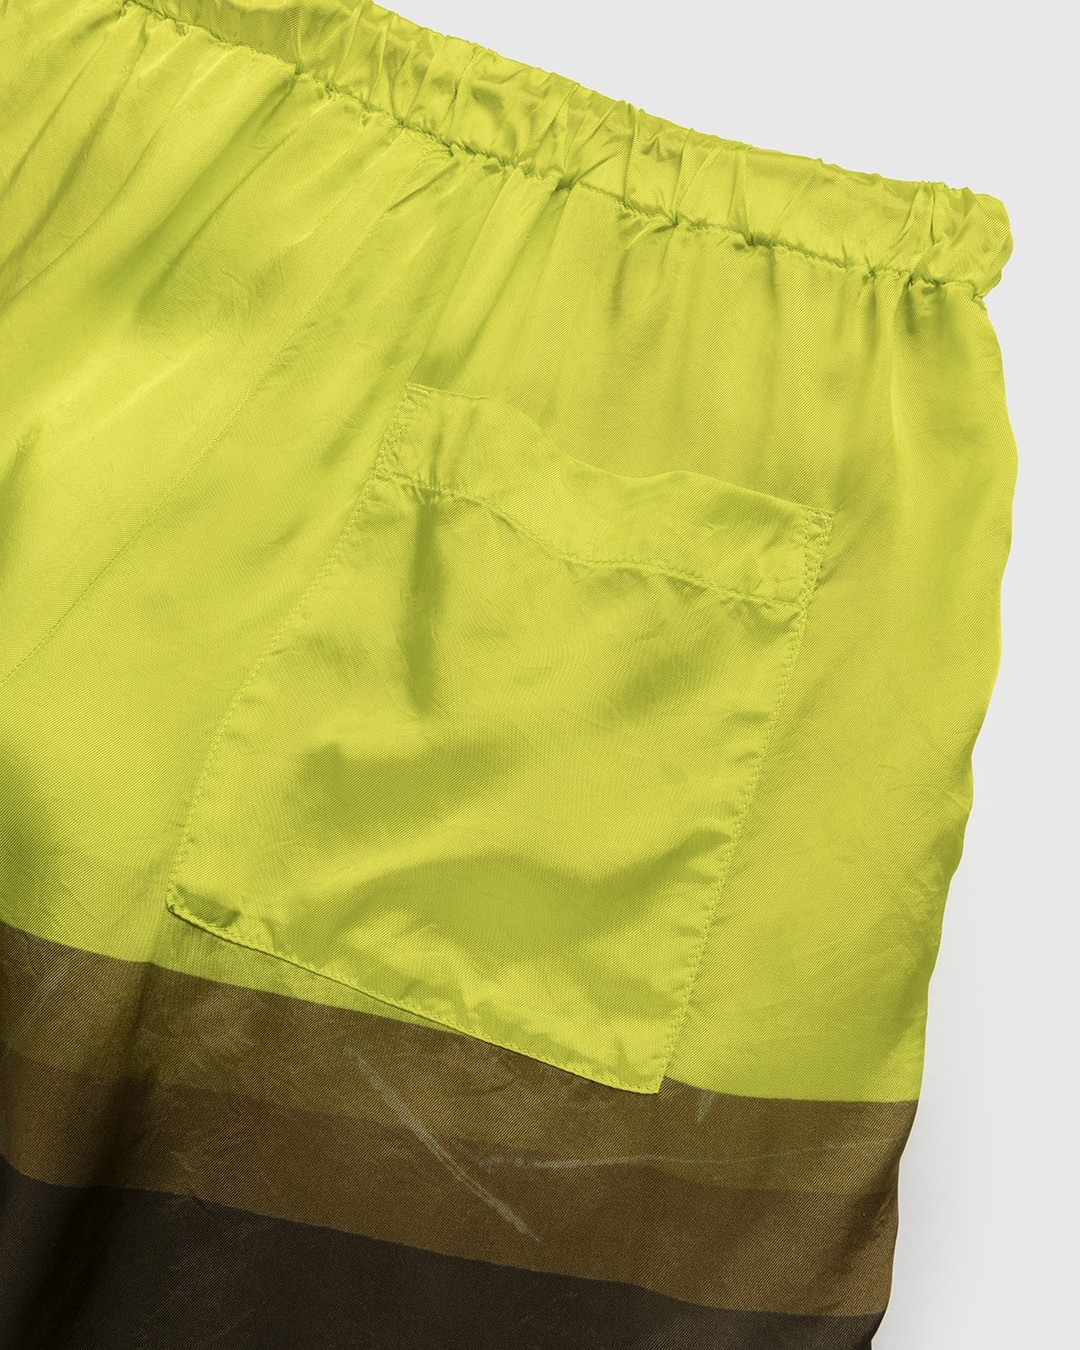 Dries van Noten – Piperi Shorts Yellow - Shorts - Yellow - Image 3